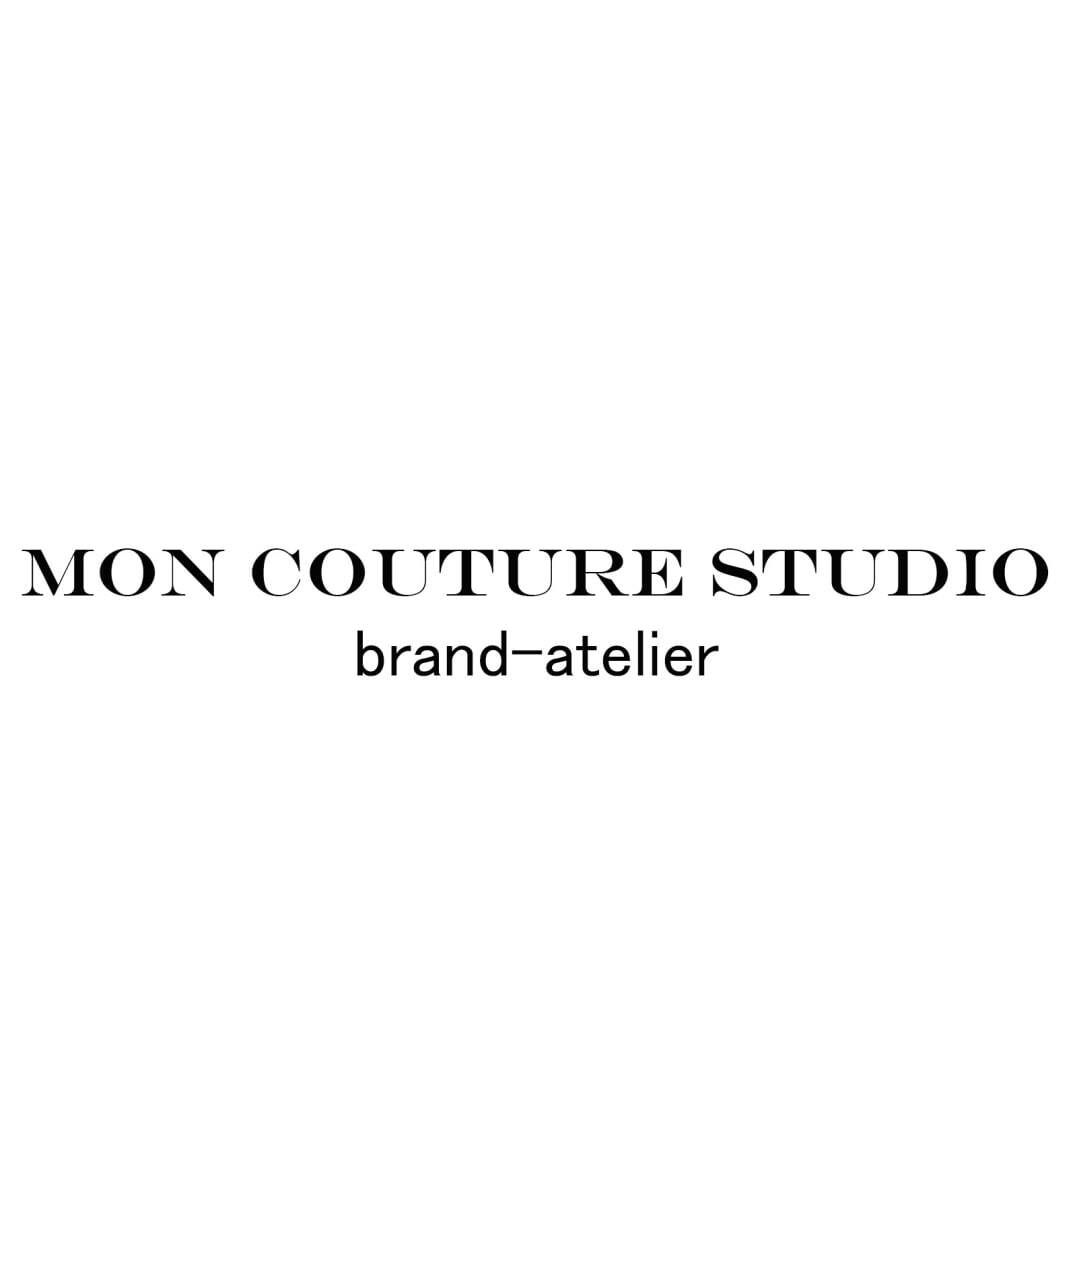 Mon Couture Studio : Brand Short Description Type Here.